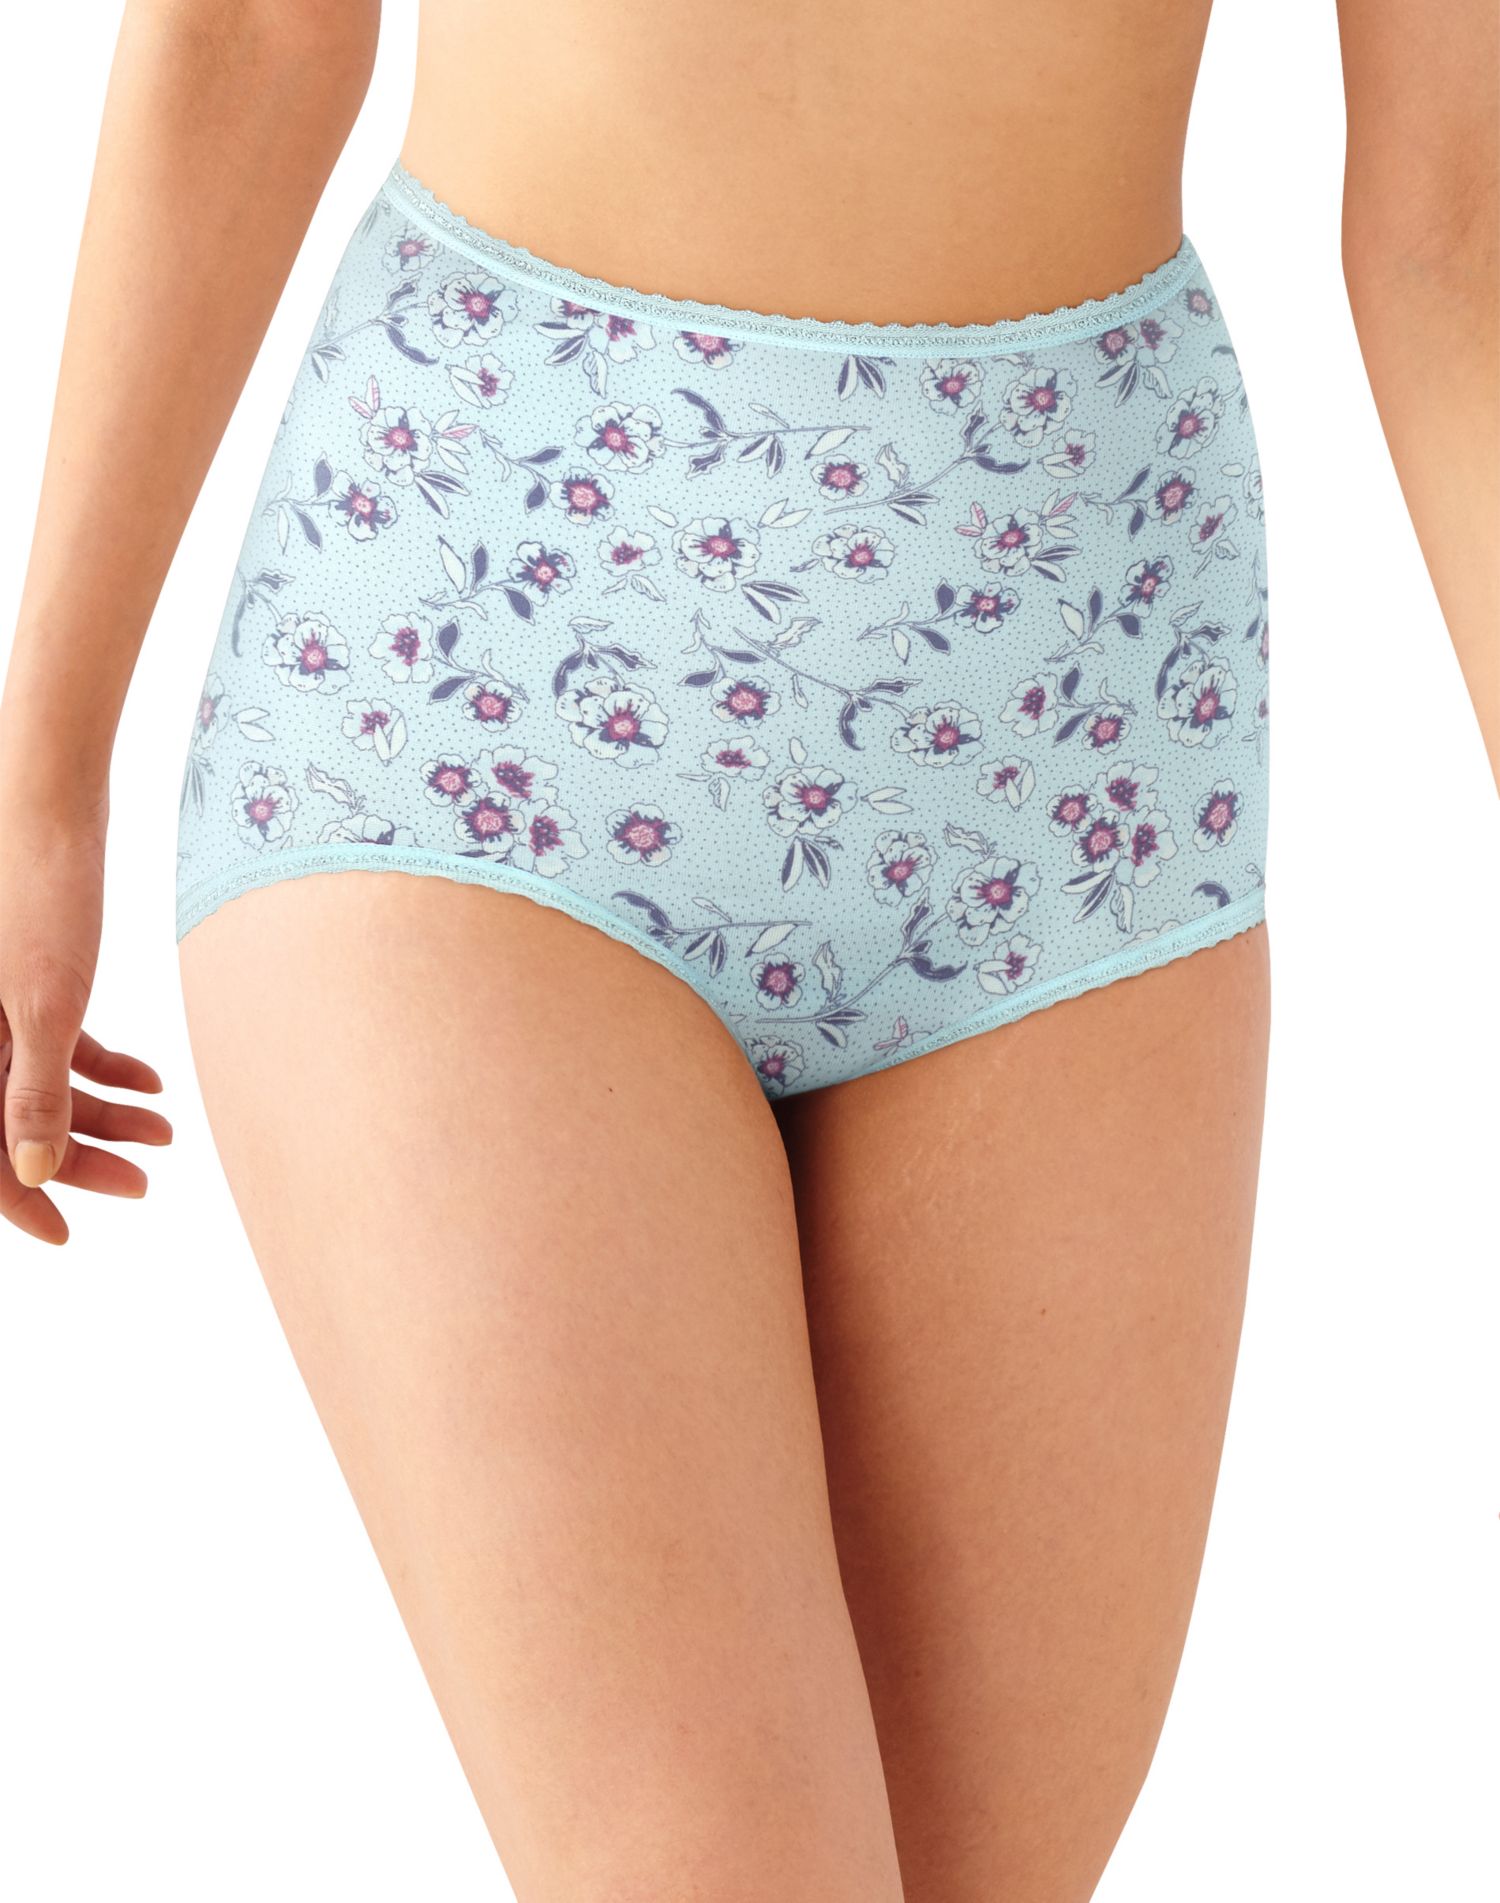 Bali Lacy Skamp Brief Panty, 8-Mocha Mist at  Women's Clothing store:  High Waist Panties